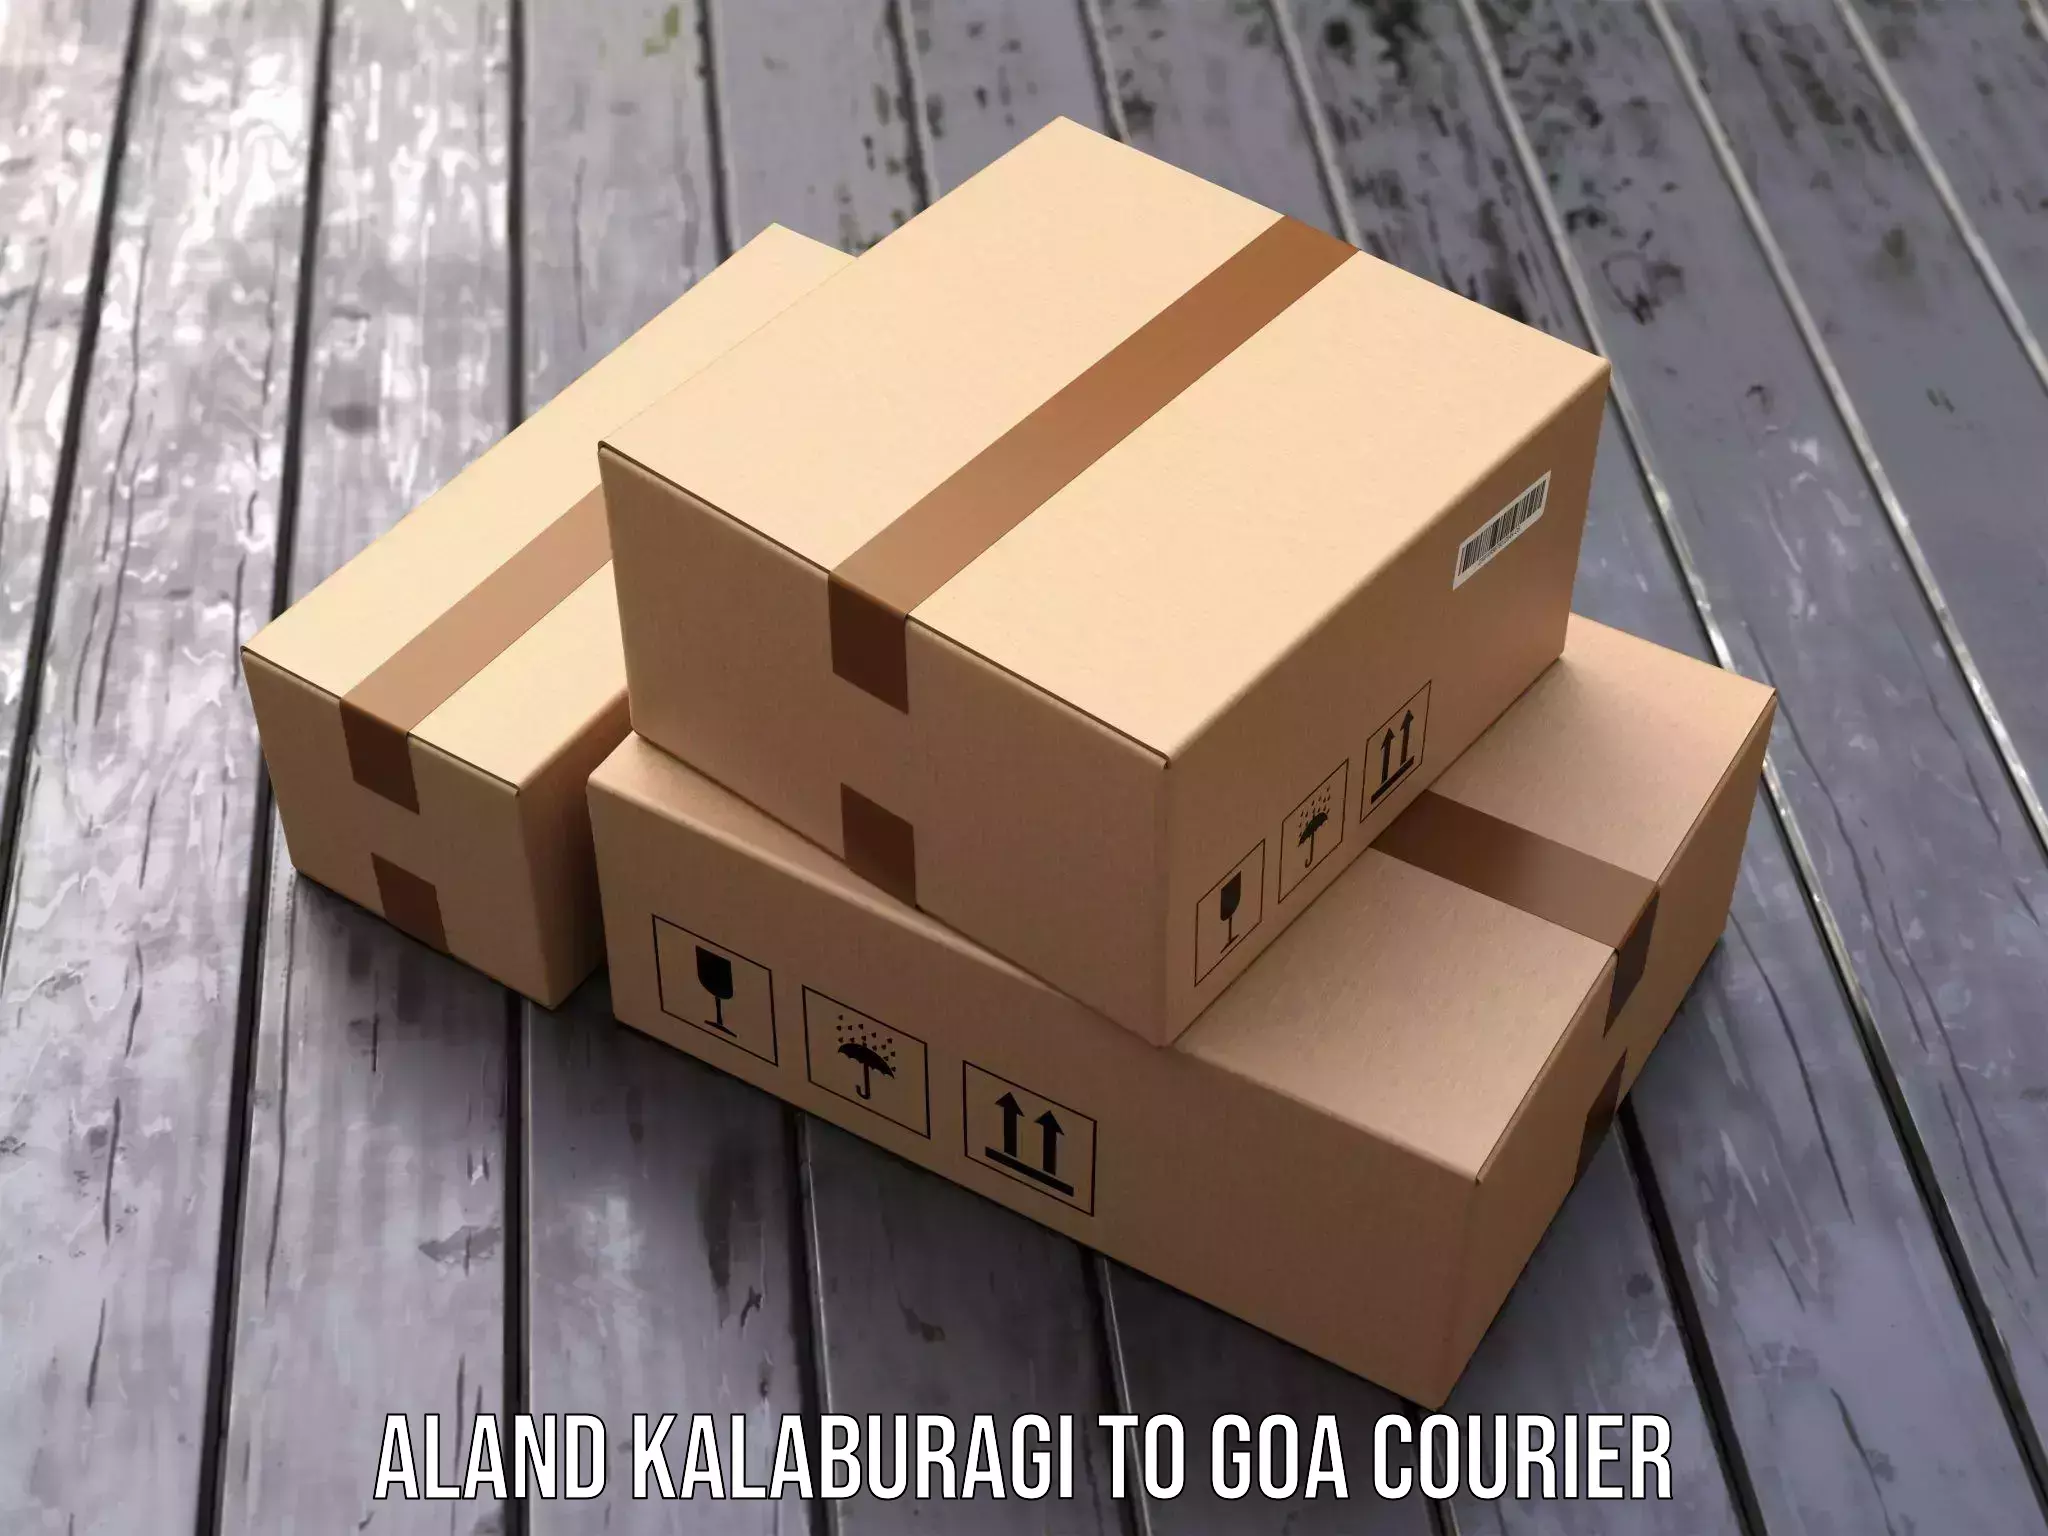 International parcel service Aland Kalaburagi to Goa